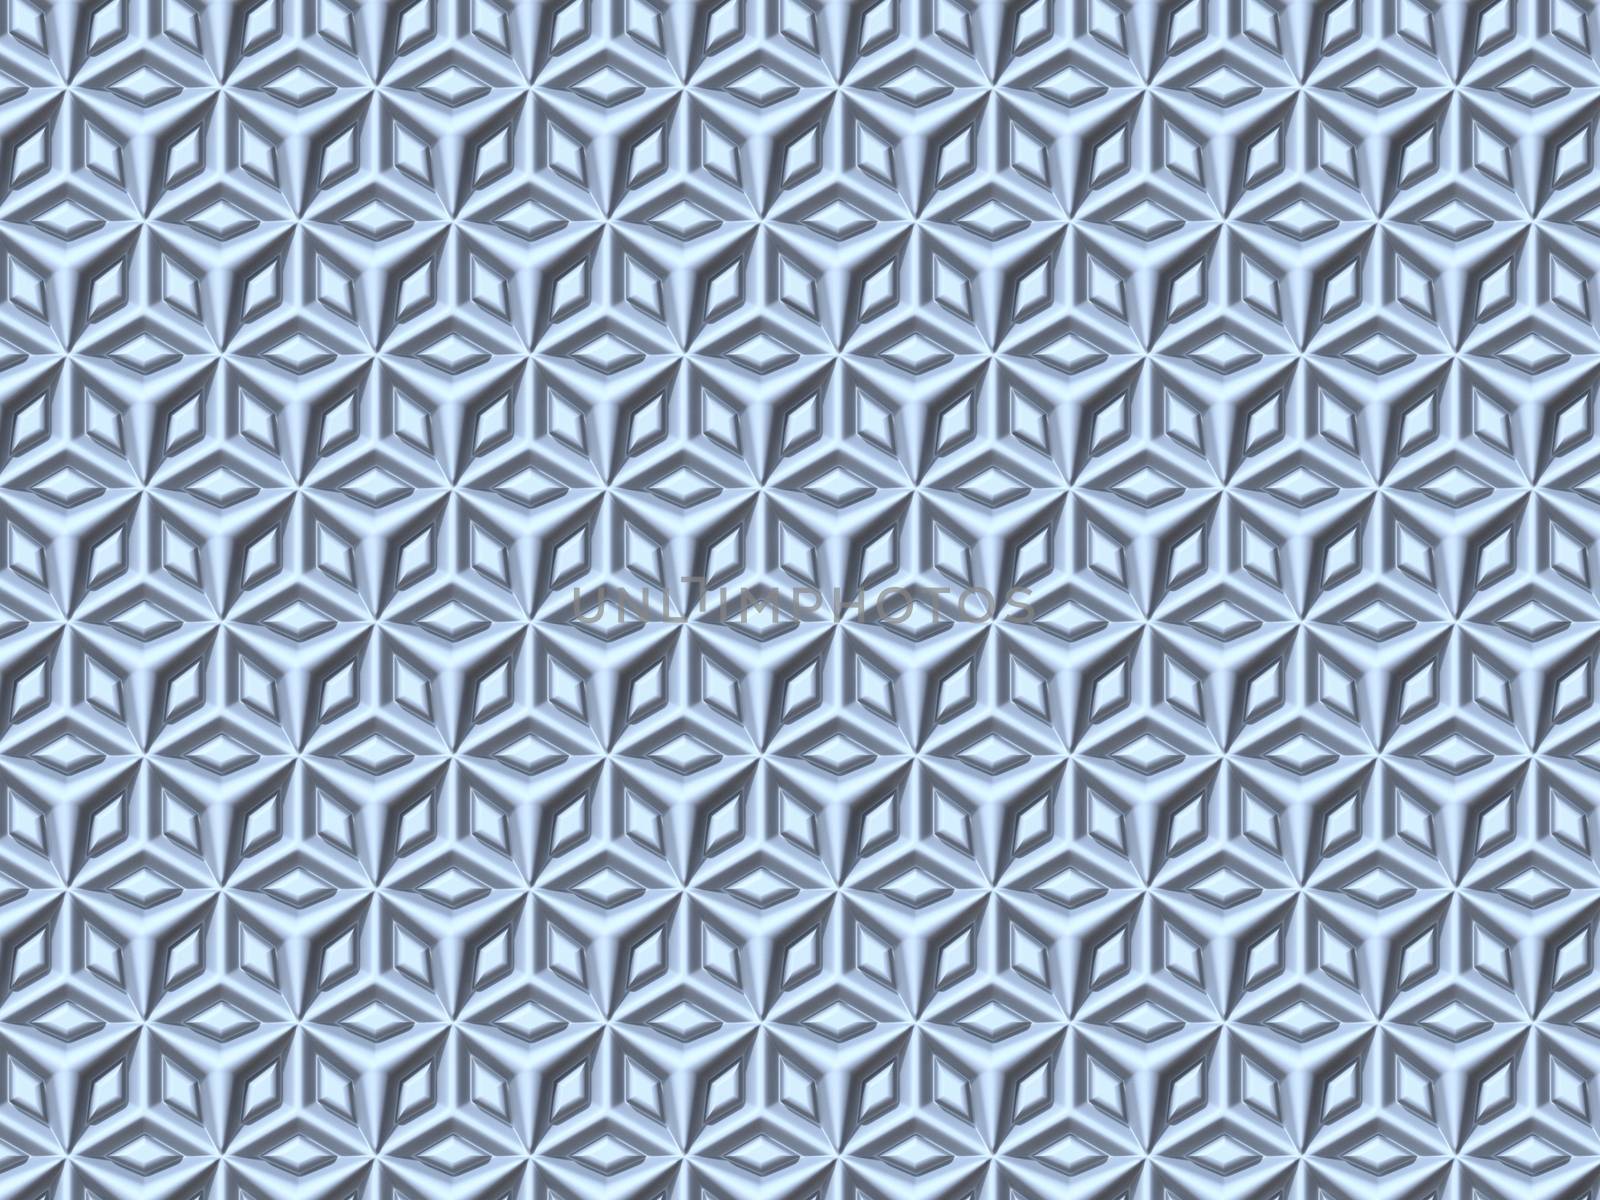 Abstract hexagonal white background 3D render illustration